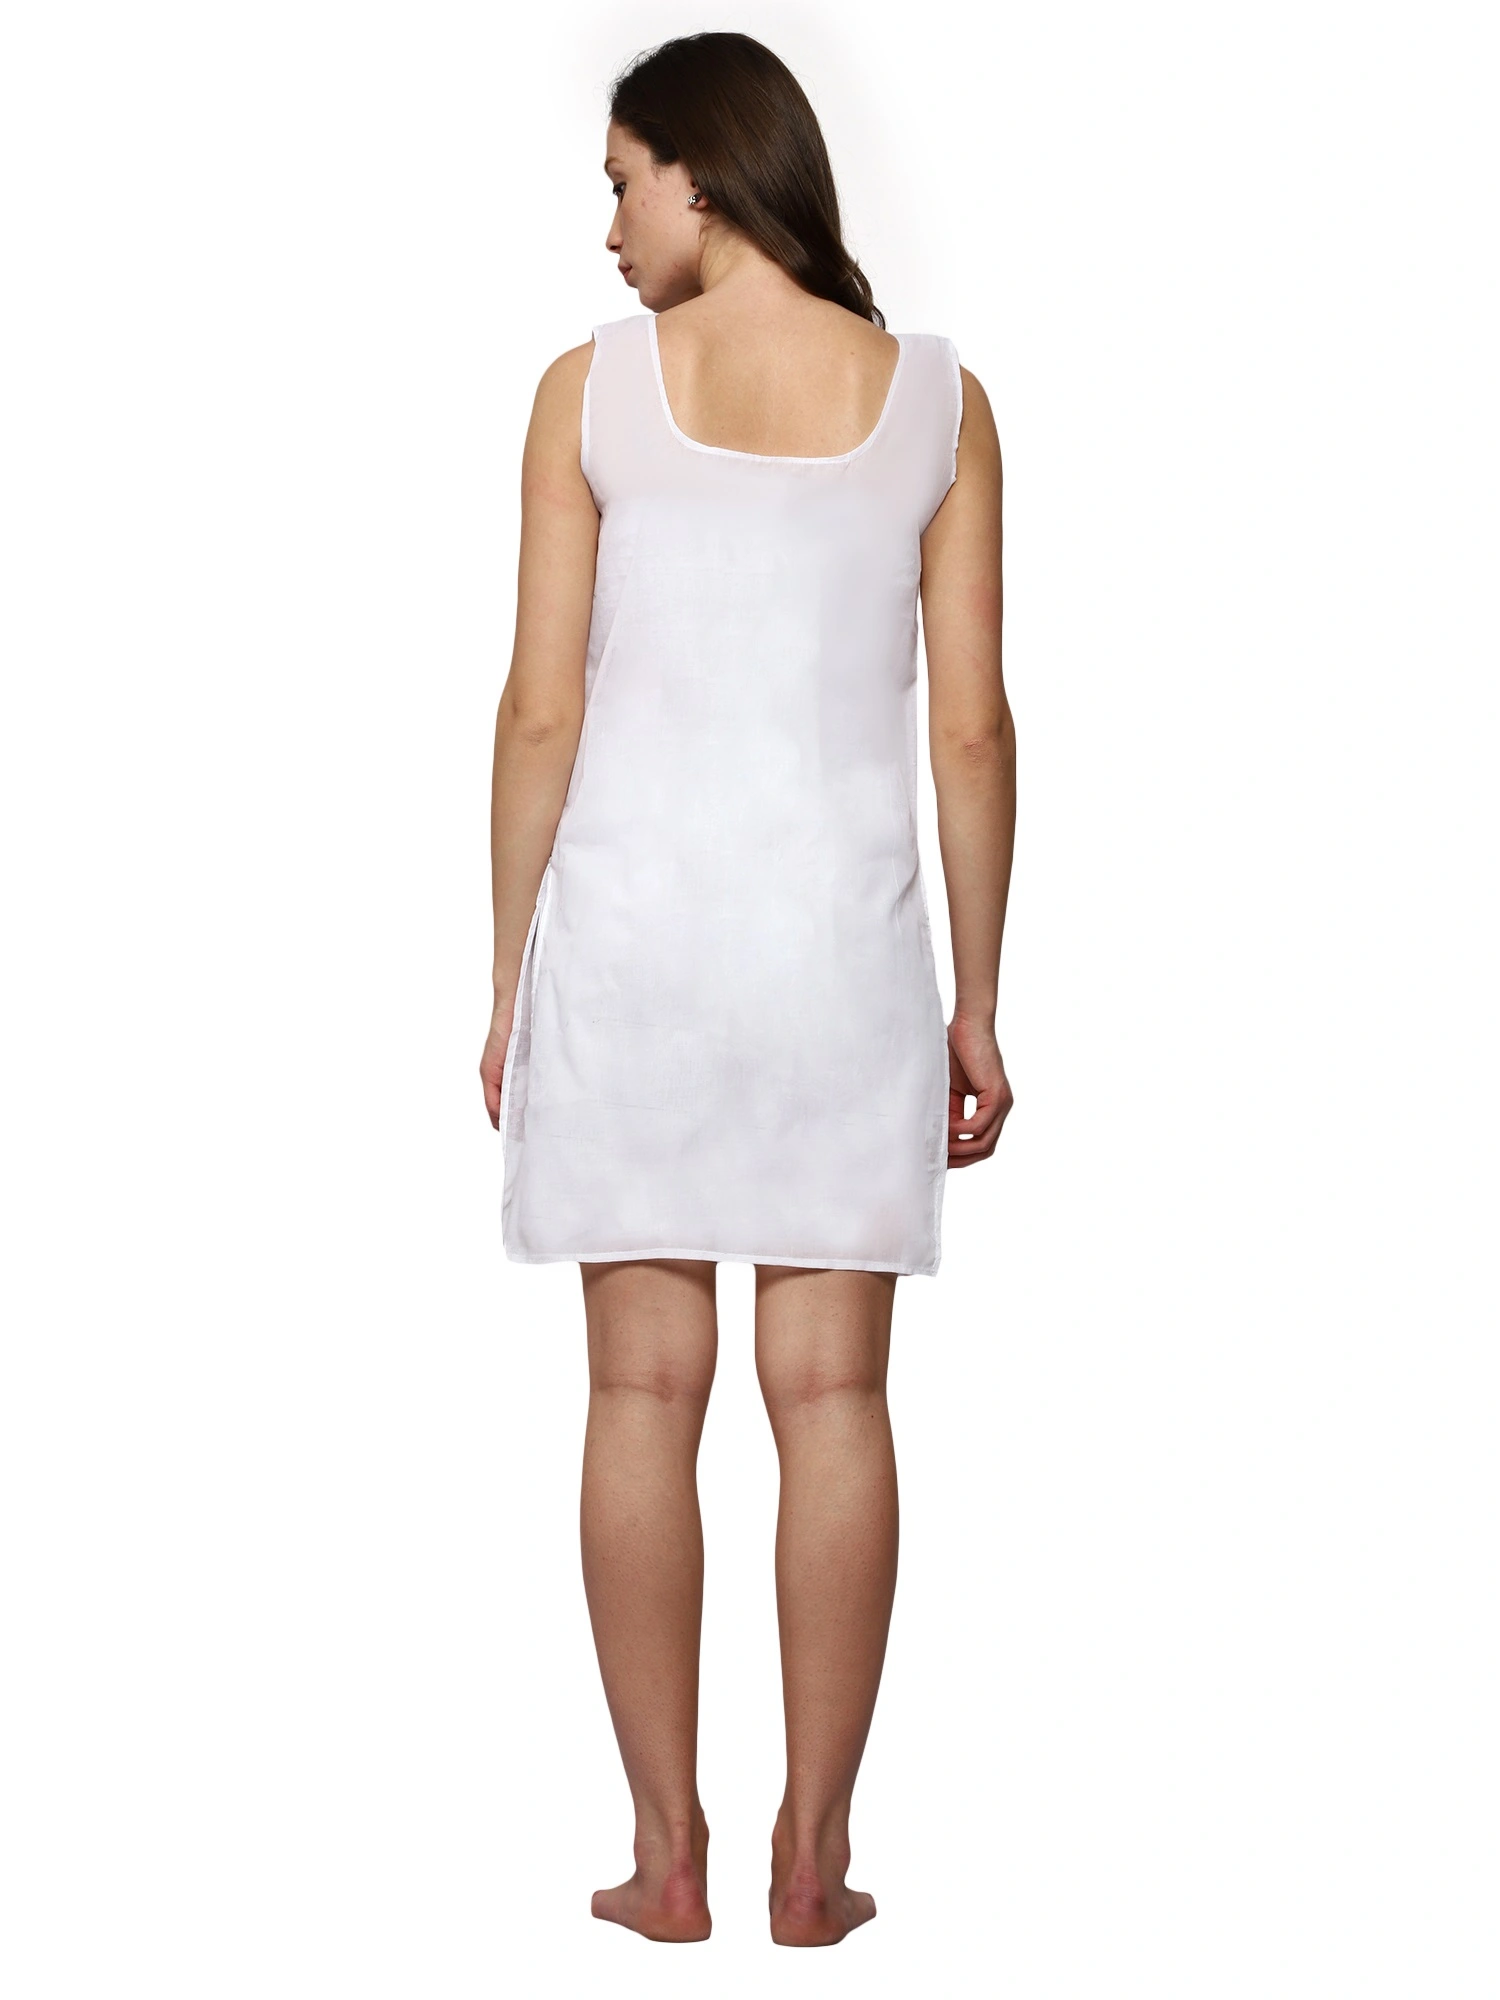 Lavangi Women White Cotton Inners / Slips / Camisoles / Linings